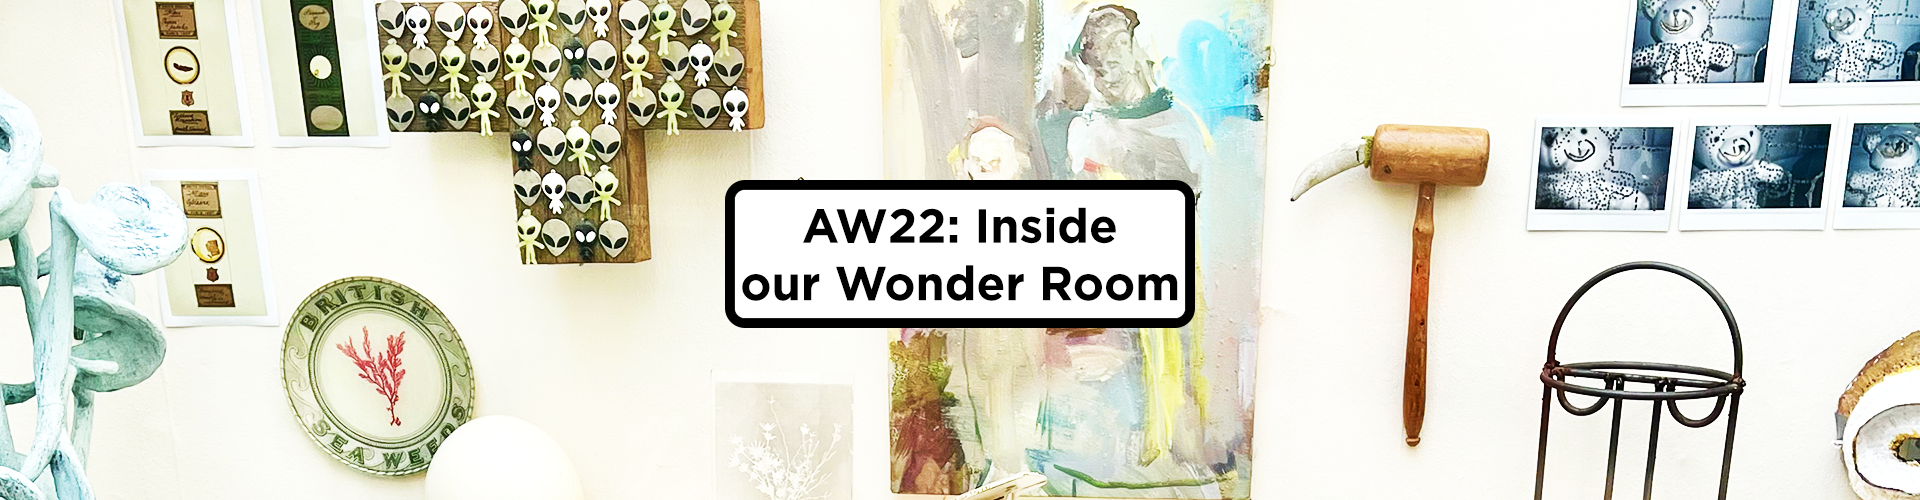 AW22: Inside our Wonder Room